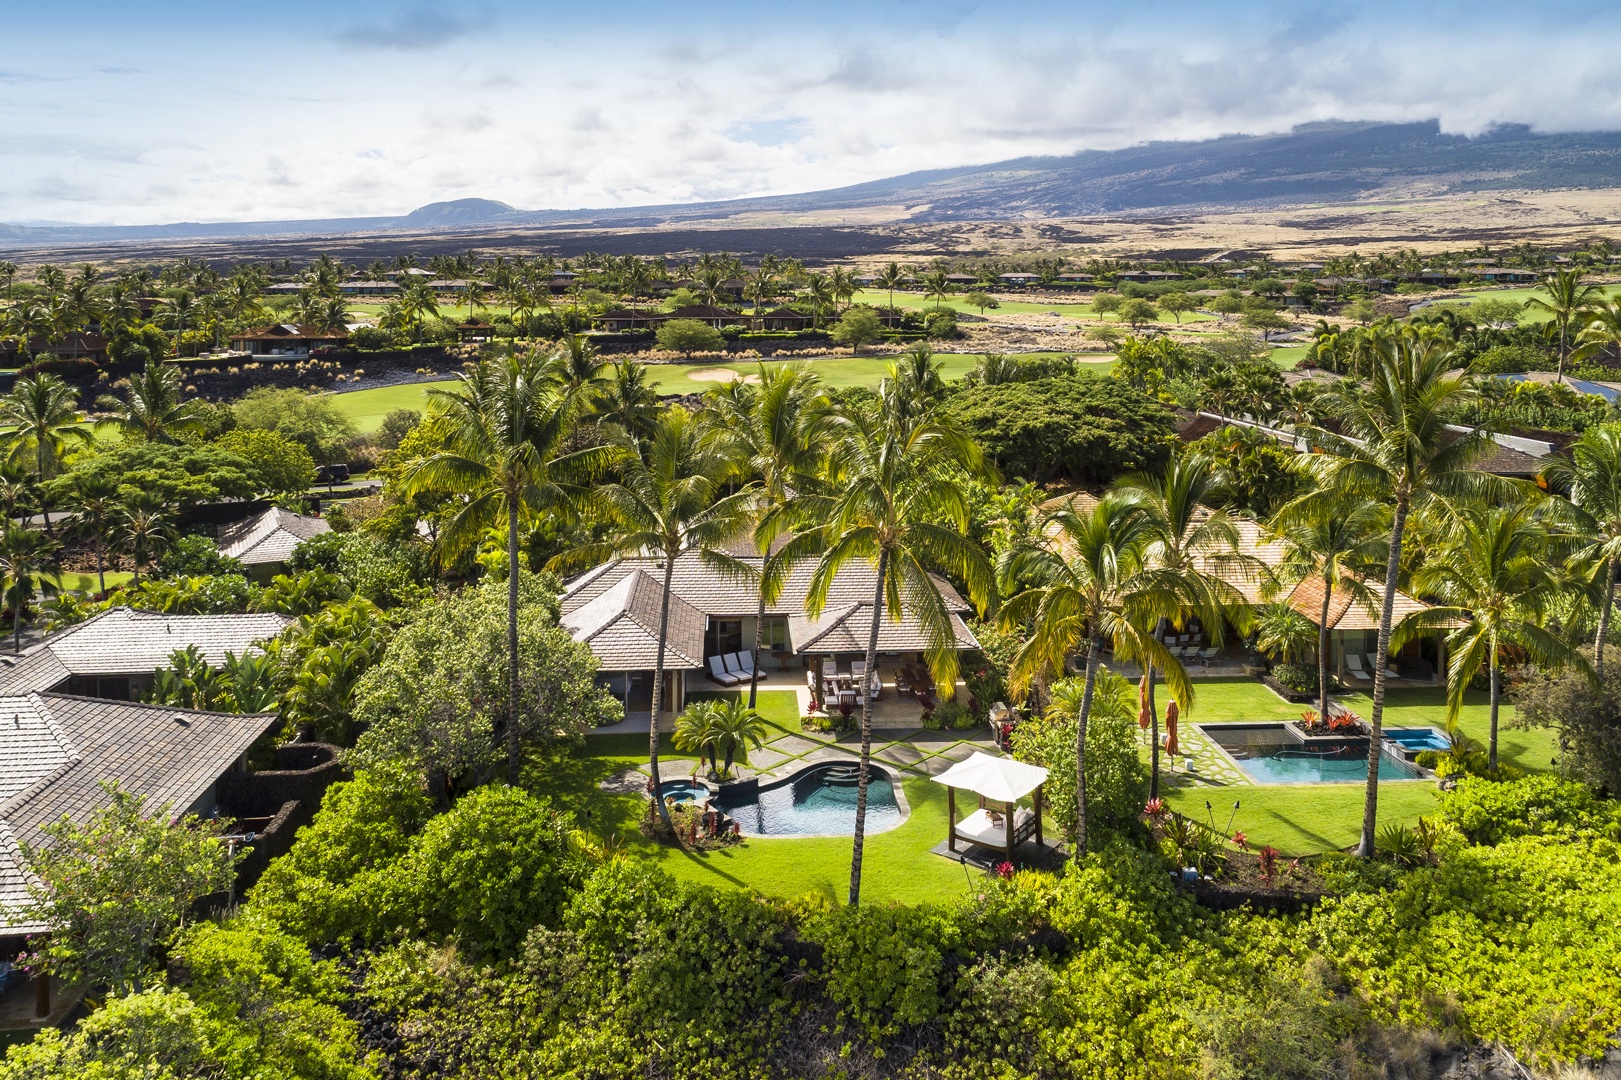 Kailua Kona Vacation Rentals, 4BD Kahikole Street (218) Estate Home at Four Seasons Resort at Hualalai - Paradise awaits at the 218 Kahikole Estate